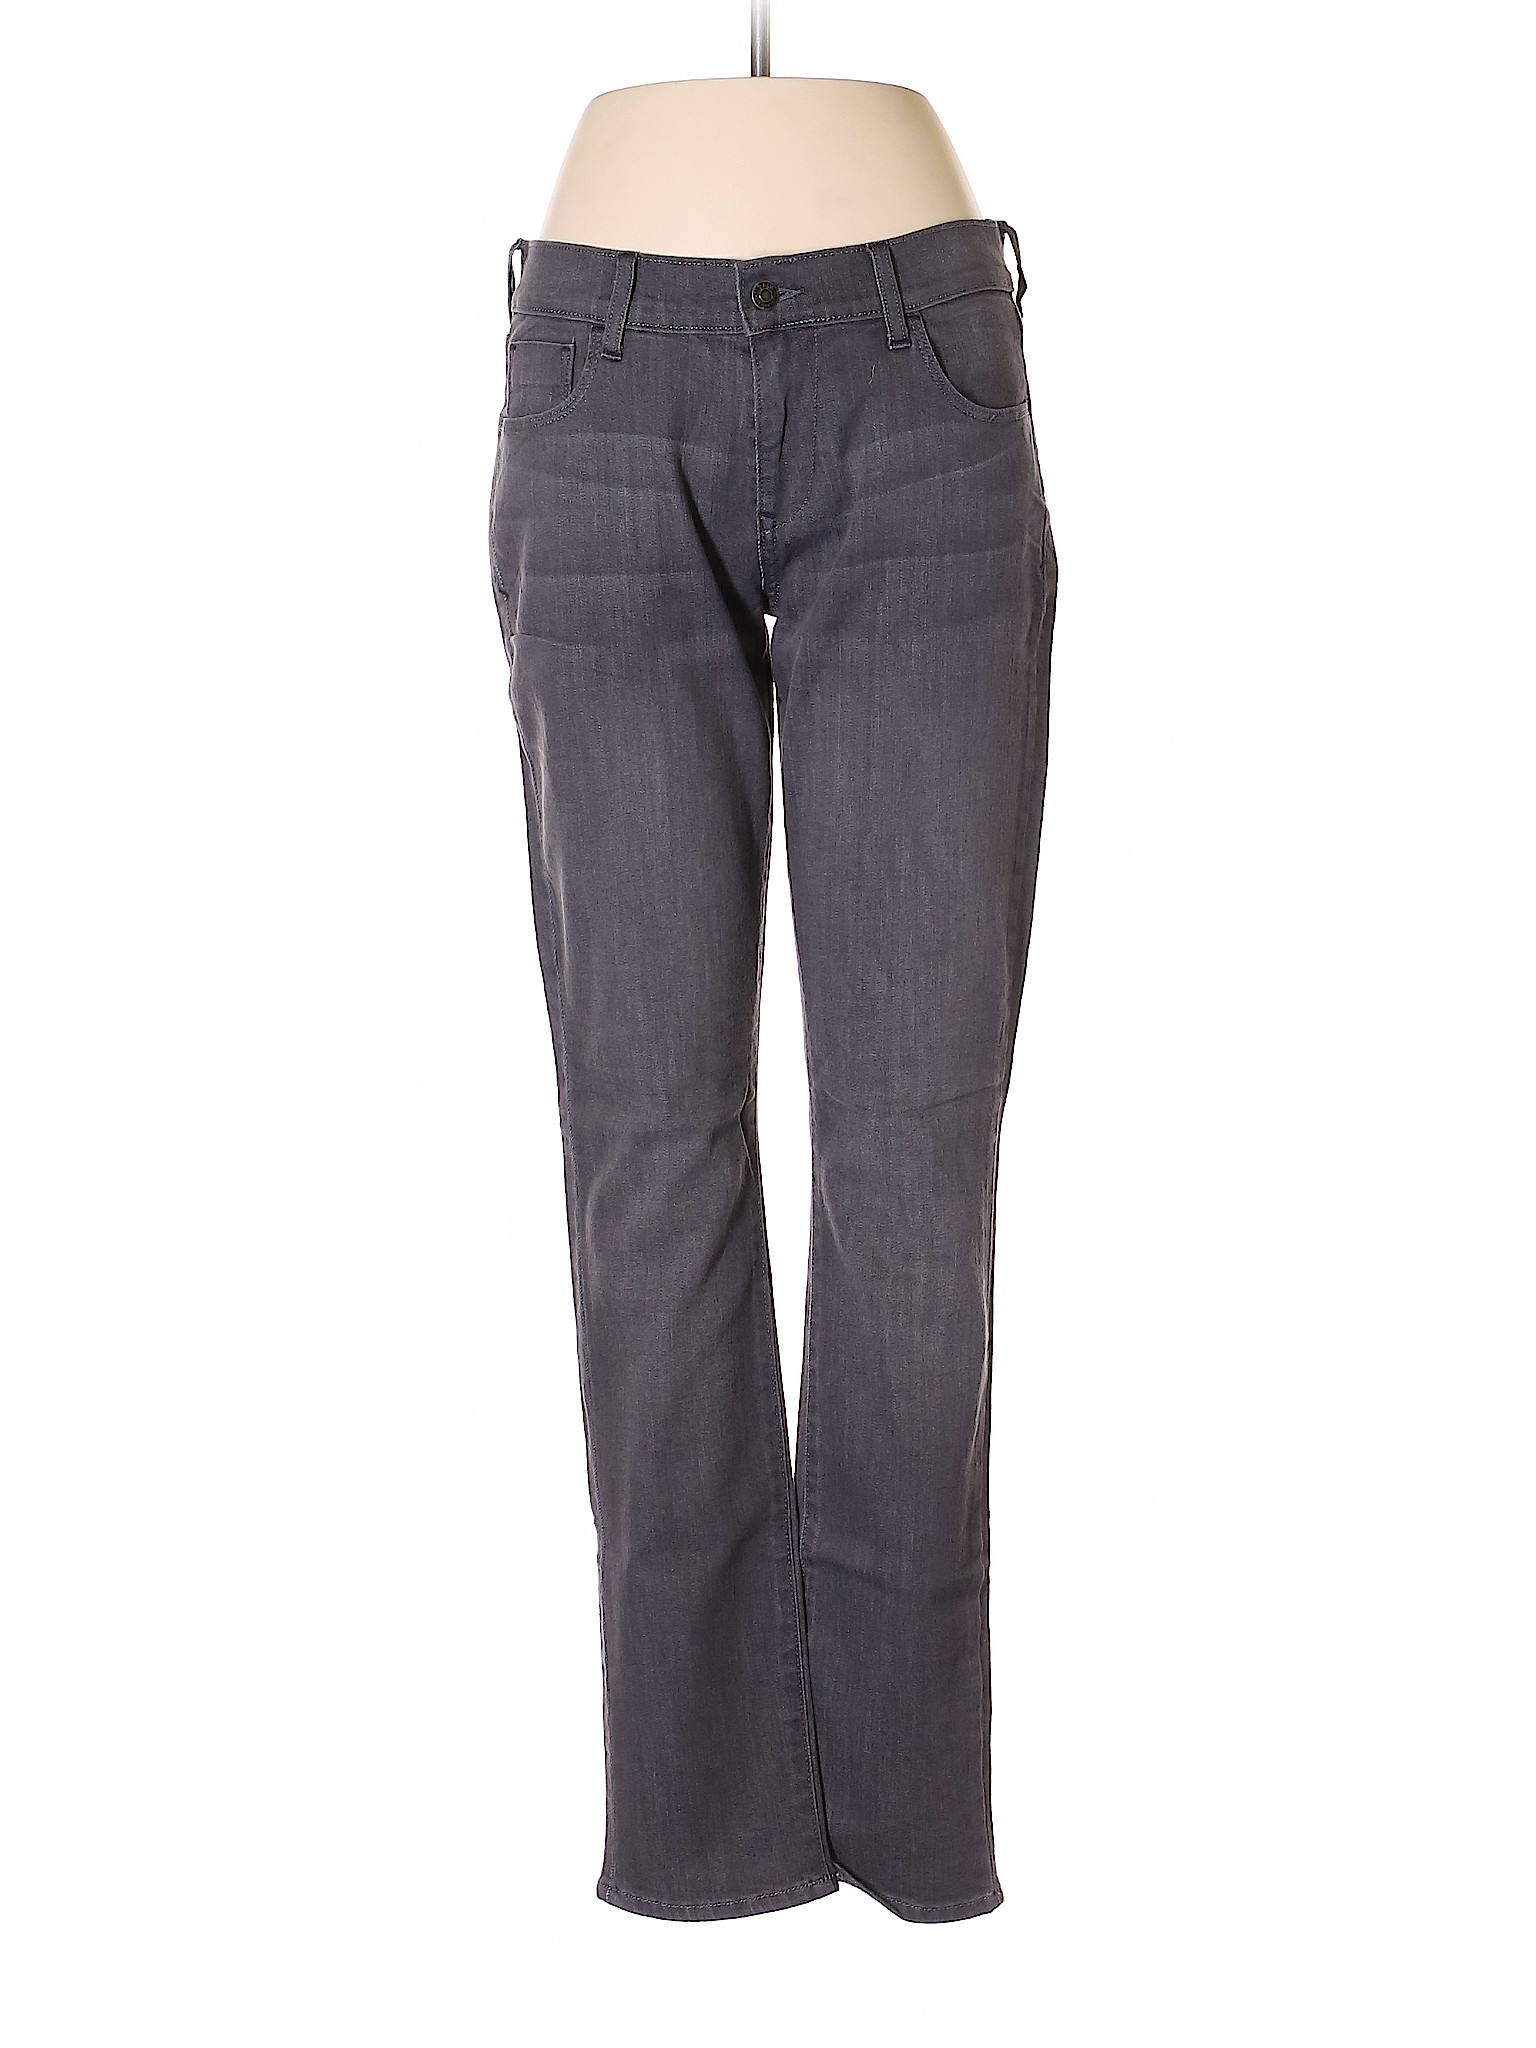 Old Navy Women Gray Jeans 6 | eBay